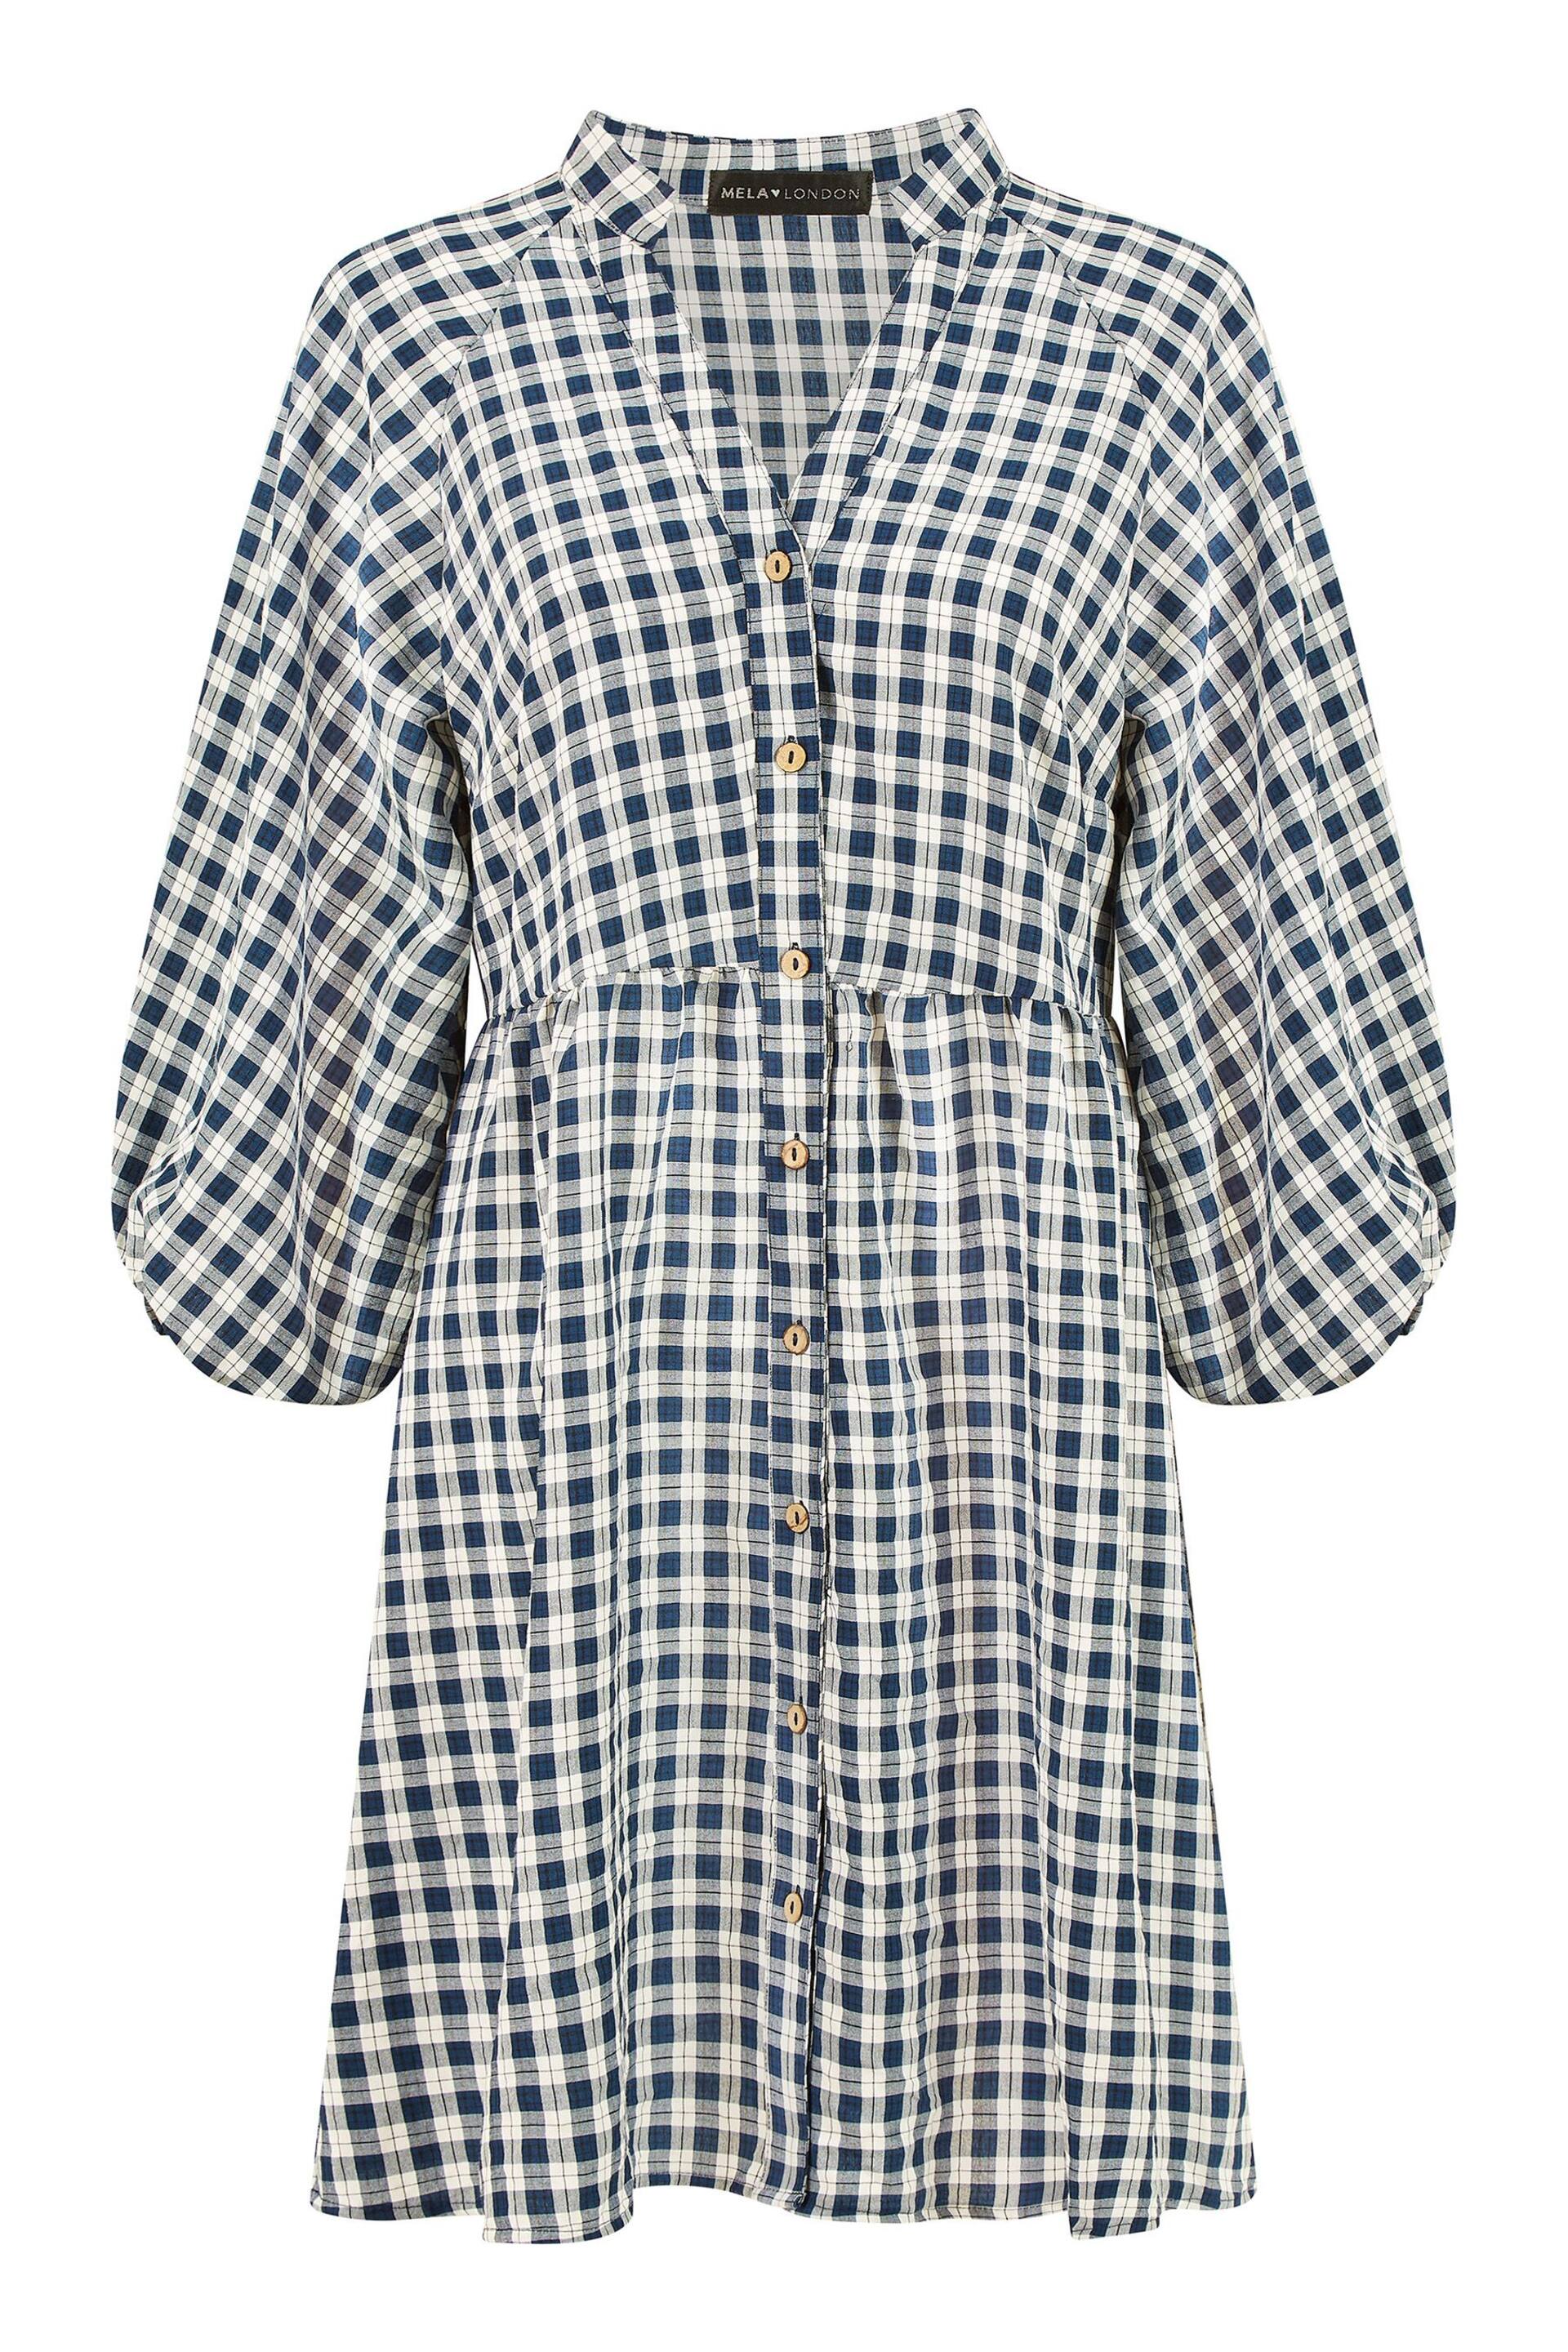 Mela Blue Cotton Checked Button Through Tunic Dress - Image 5 of 5